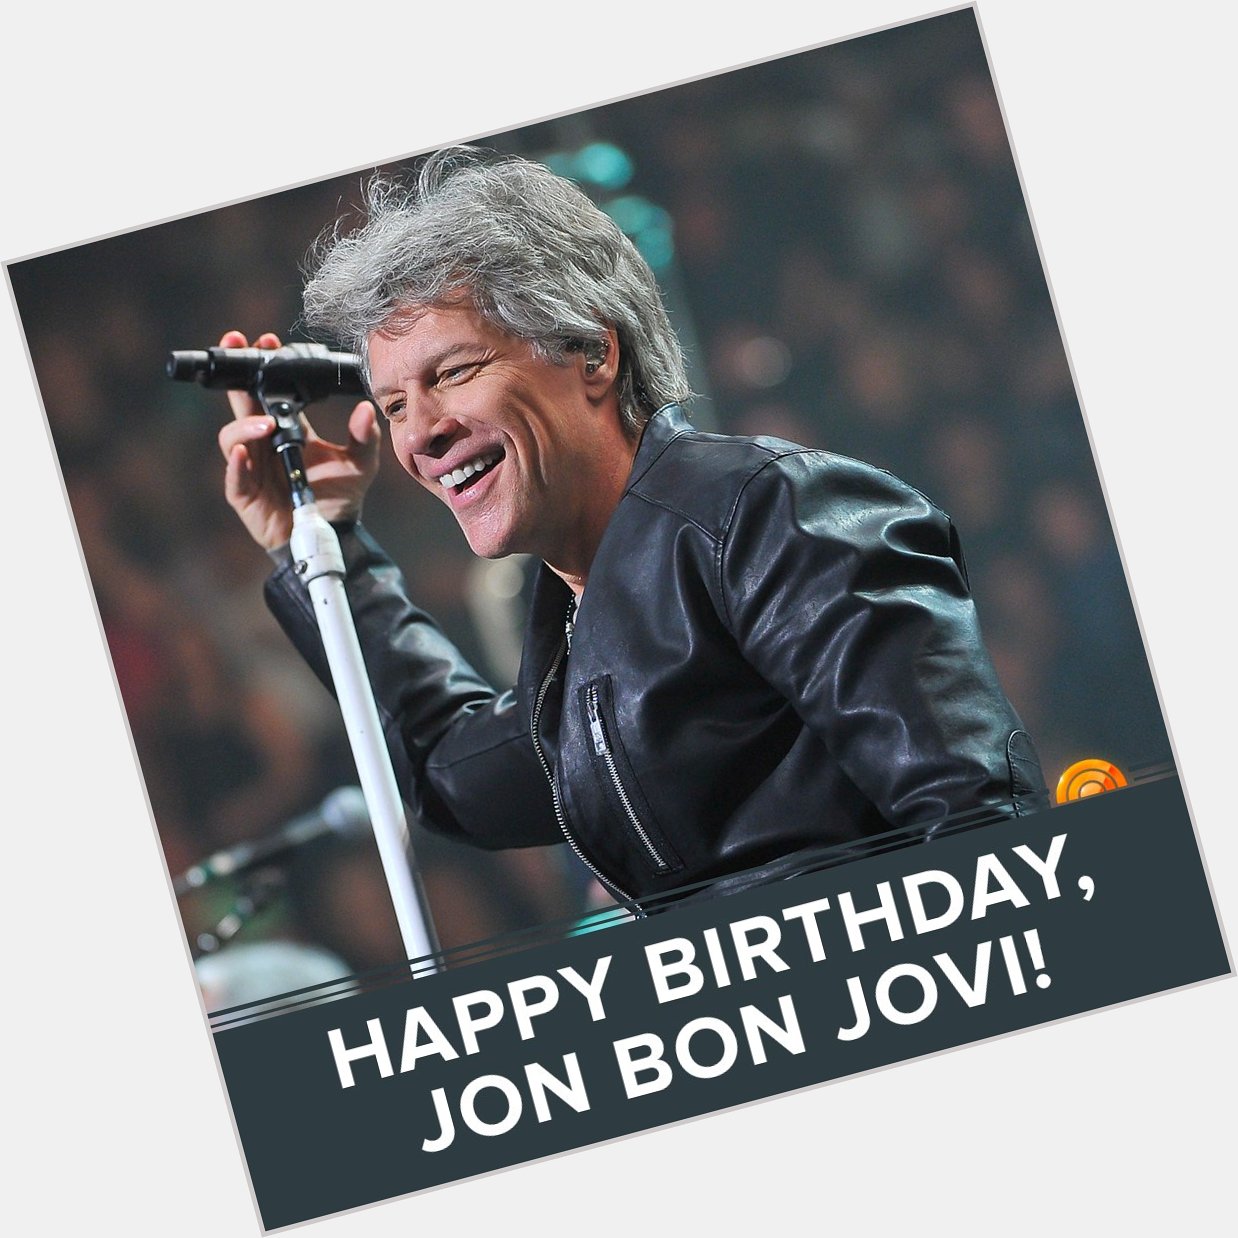 Happy 55th birthday, Jon Bon Jovi! 